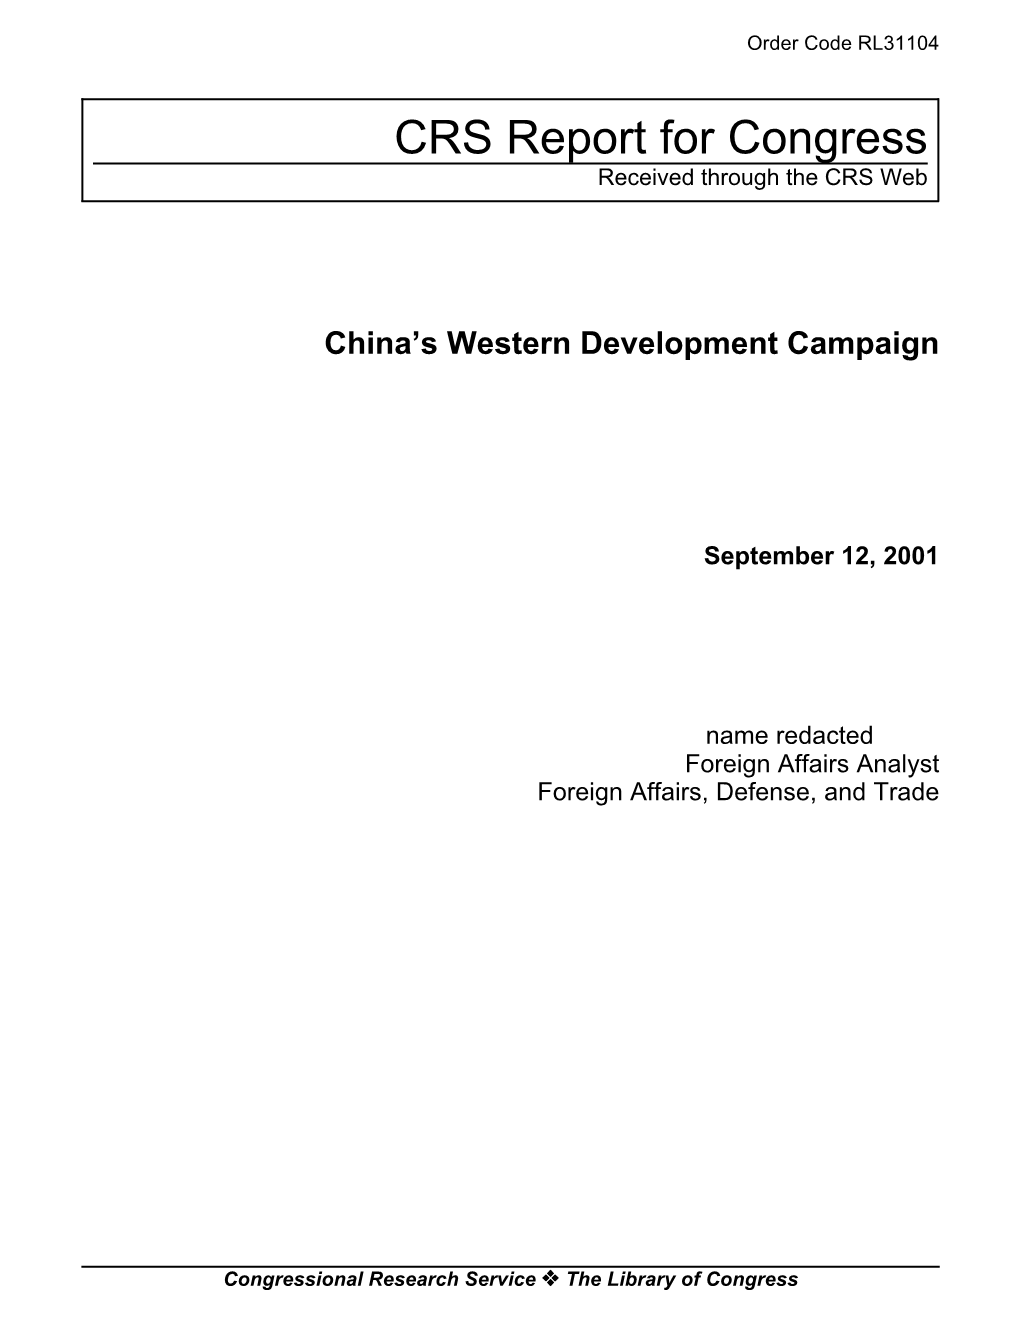 China's Western Development Campaign